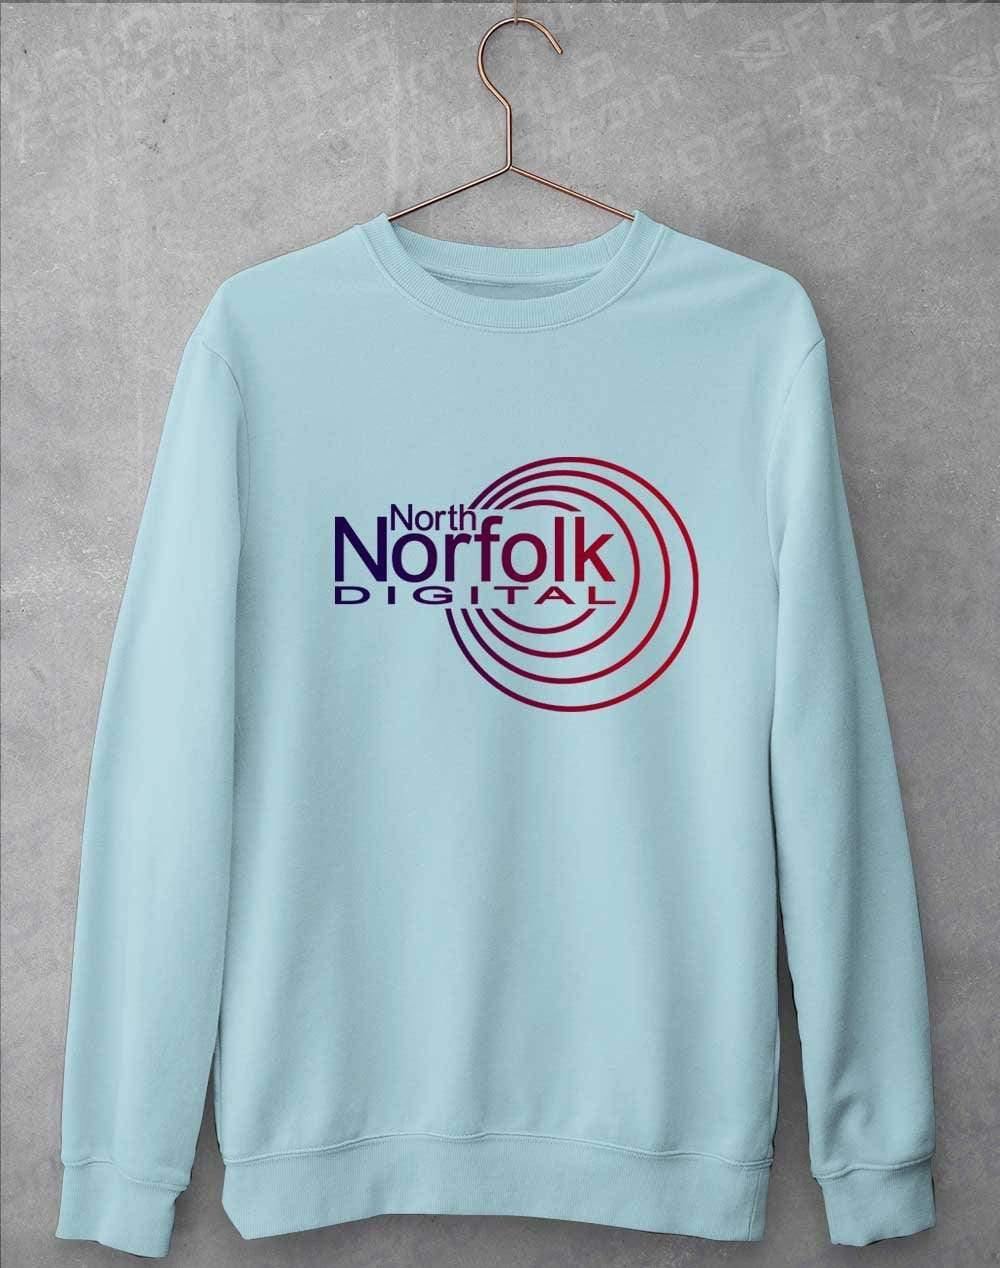 North Norfolk Digital Sweatshirt S / Sky Blue  - Off World Tees